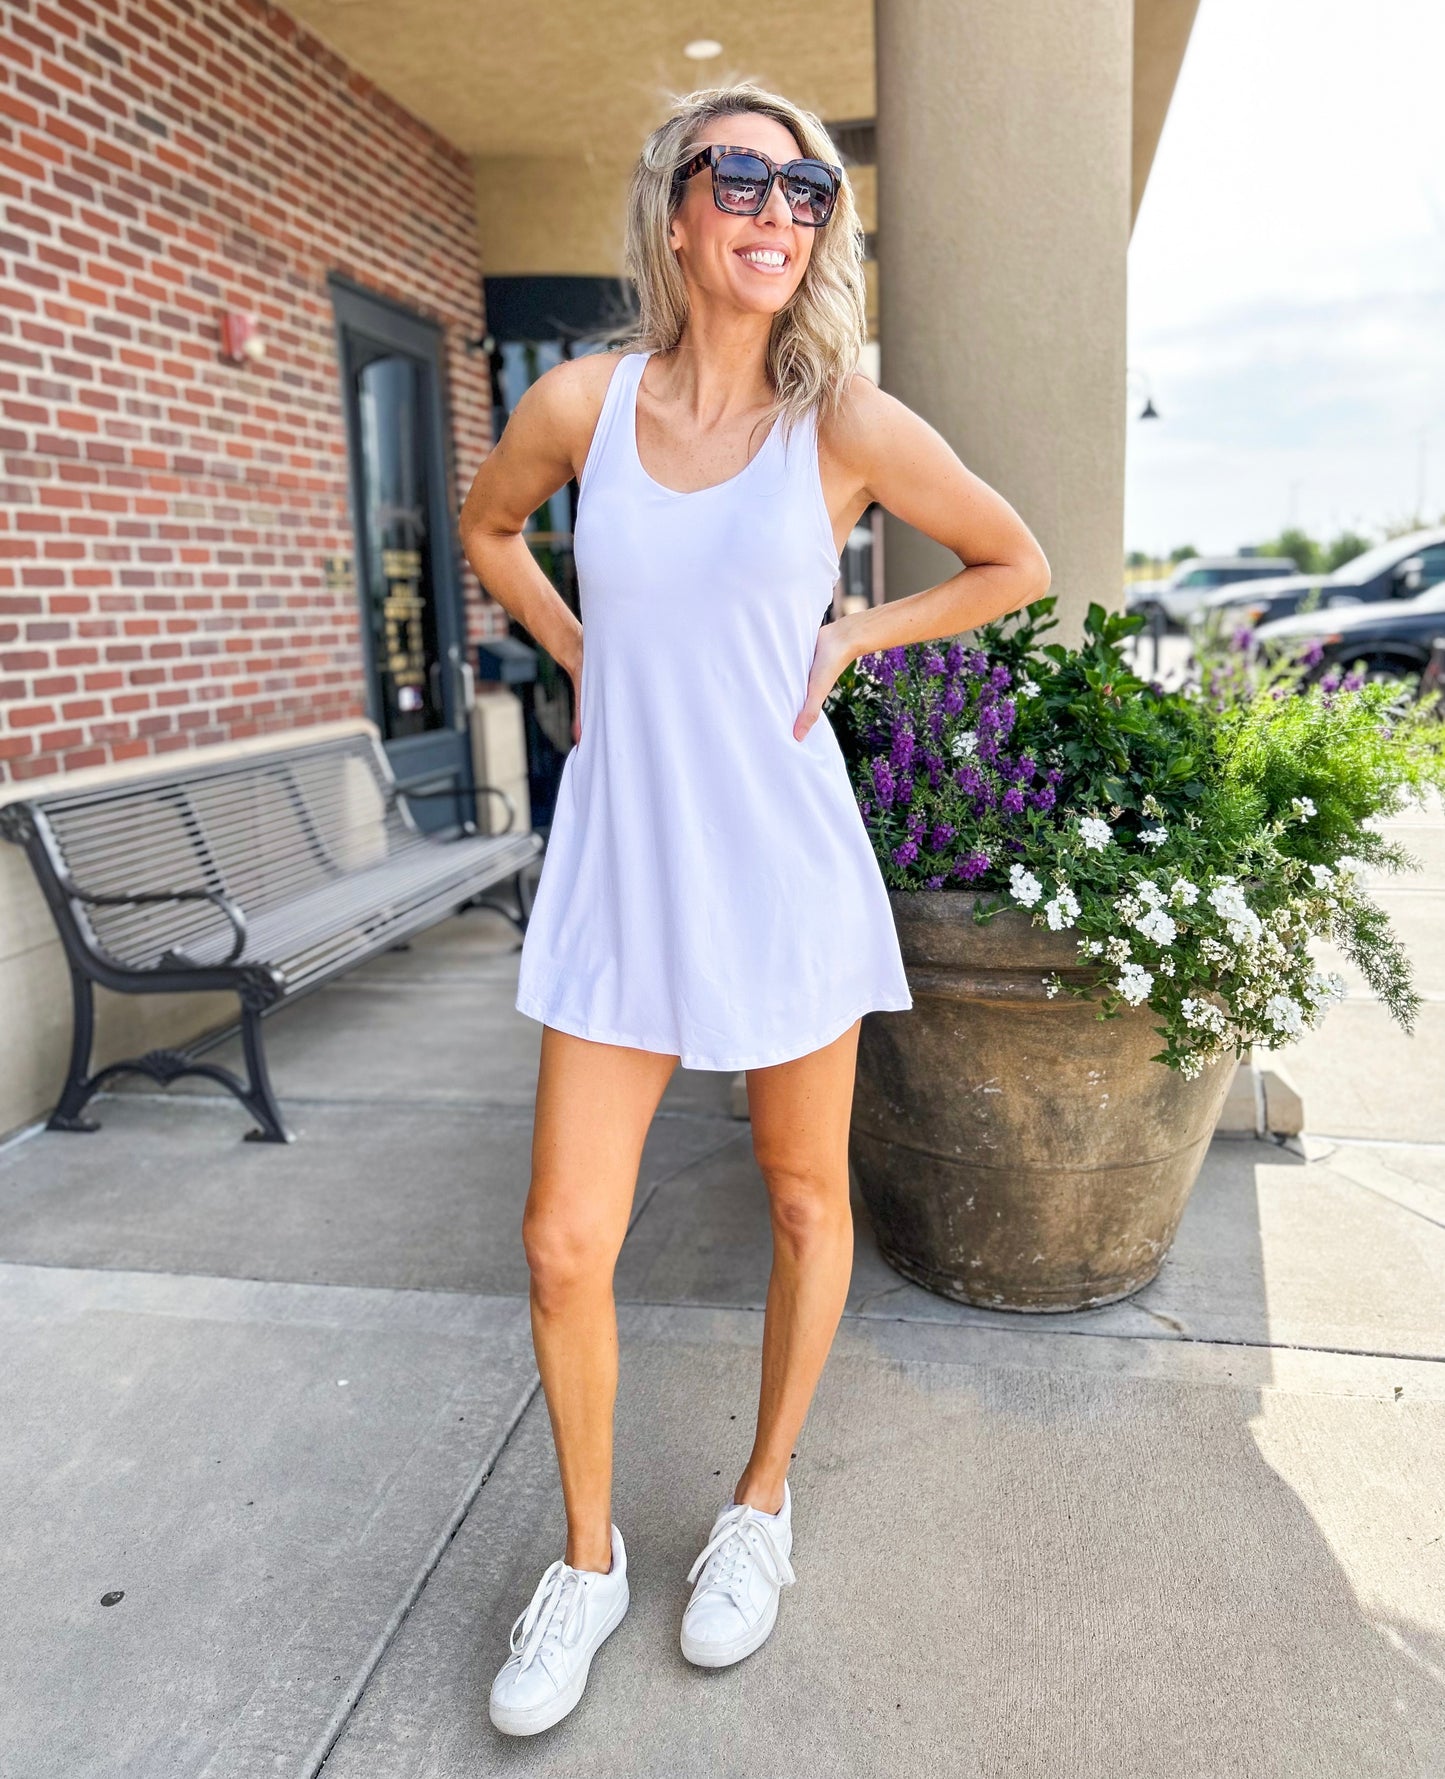 Sadei Tennis Skort Dress (White)